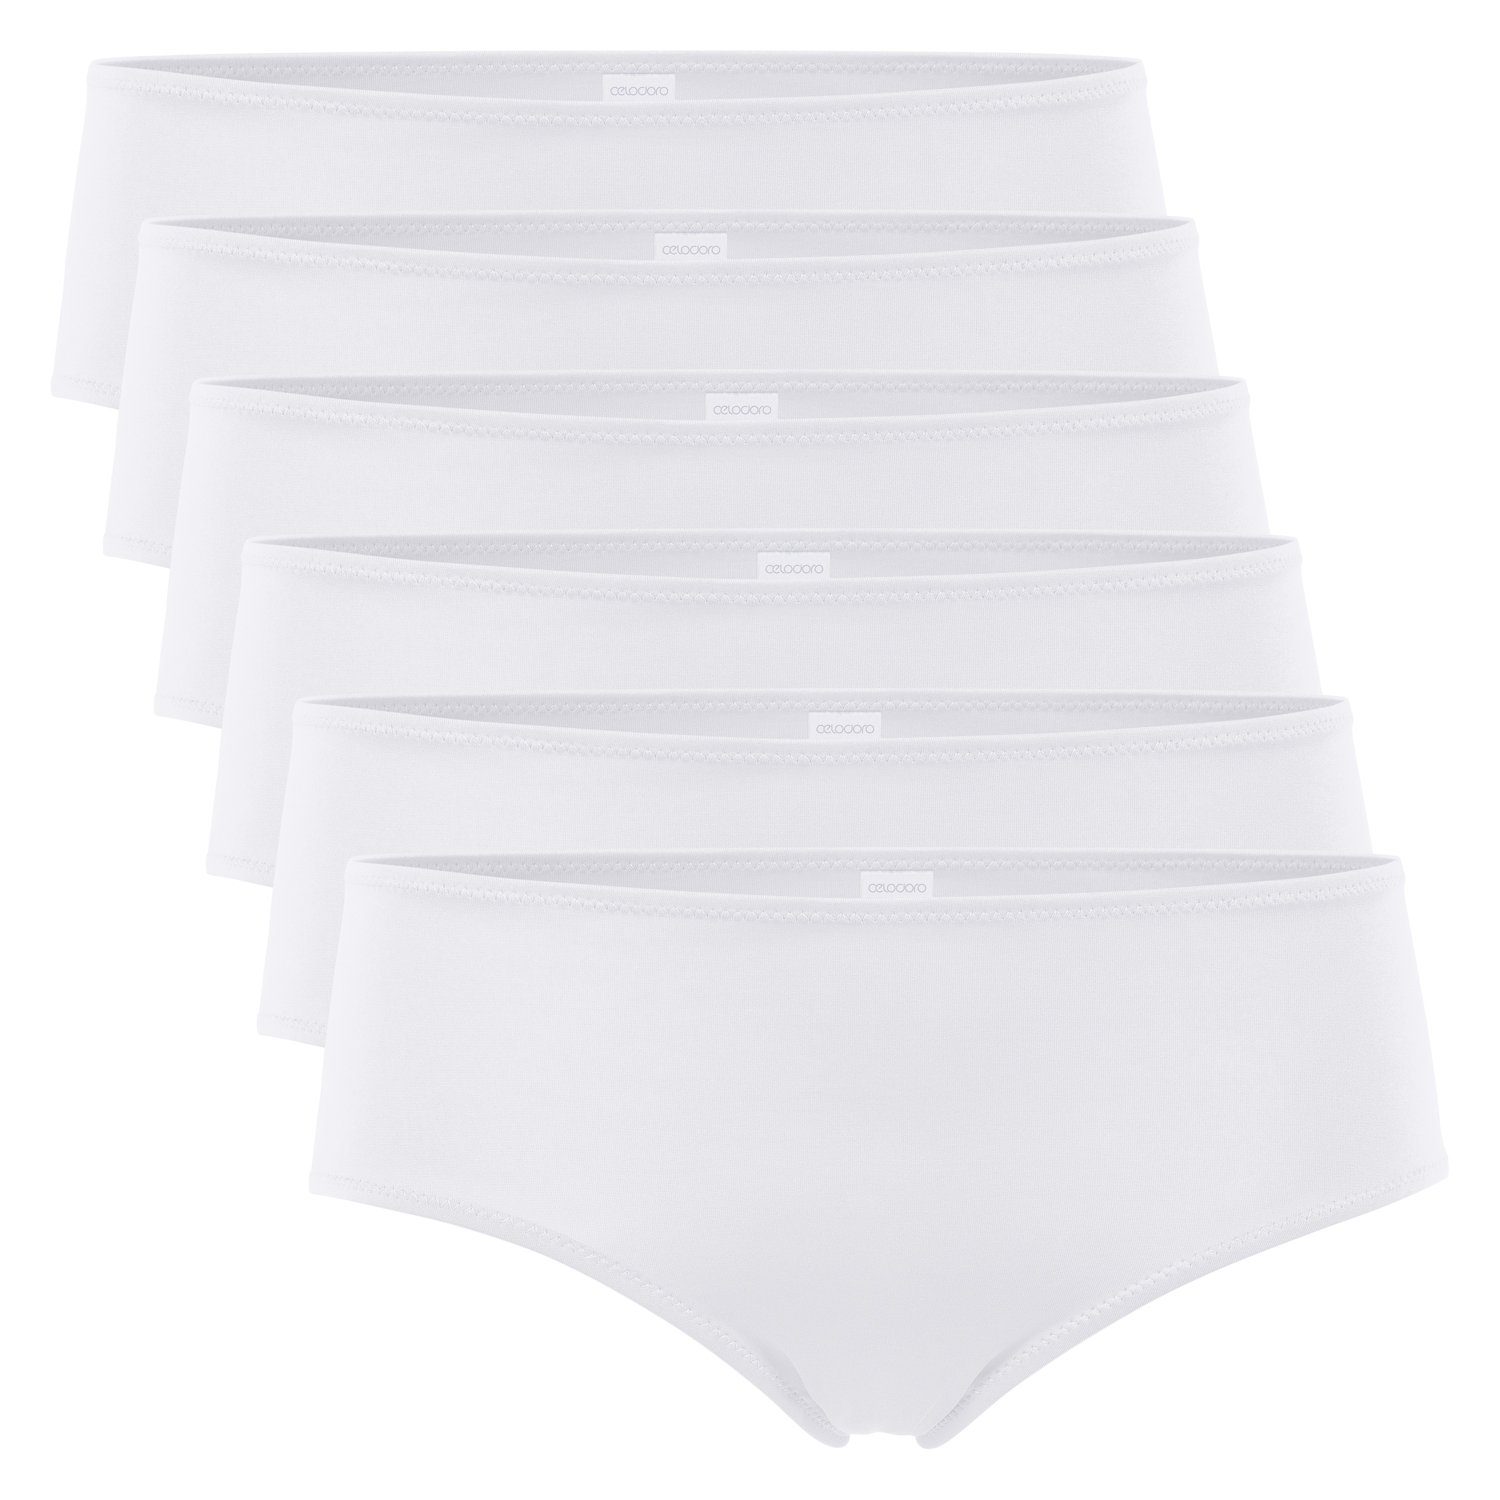 celodoro Panty Damen Panty Hipster (6er Pack) Panties aus Quick Dry-Fasern Weiss